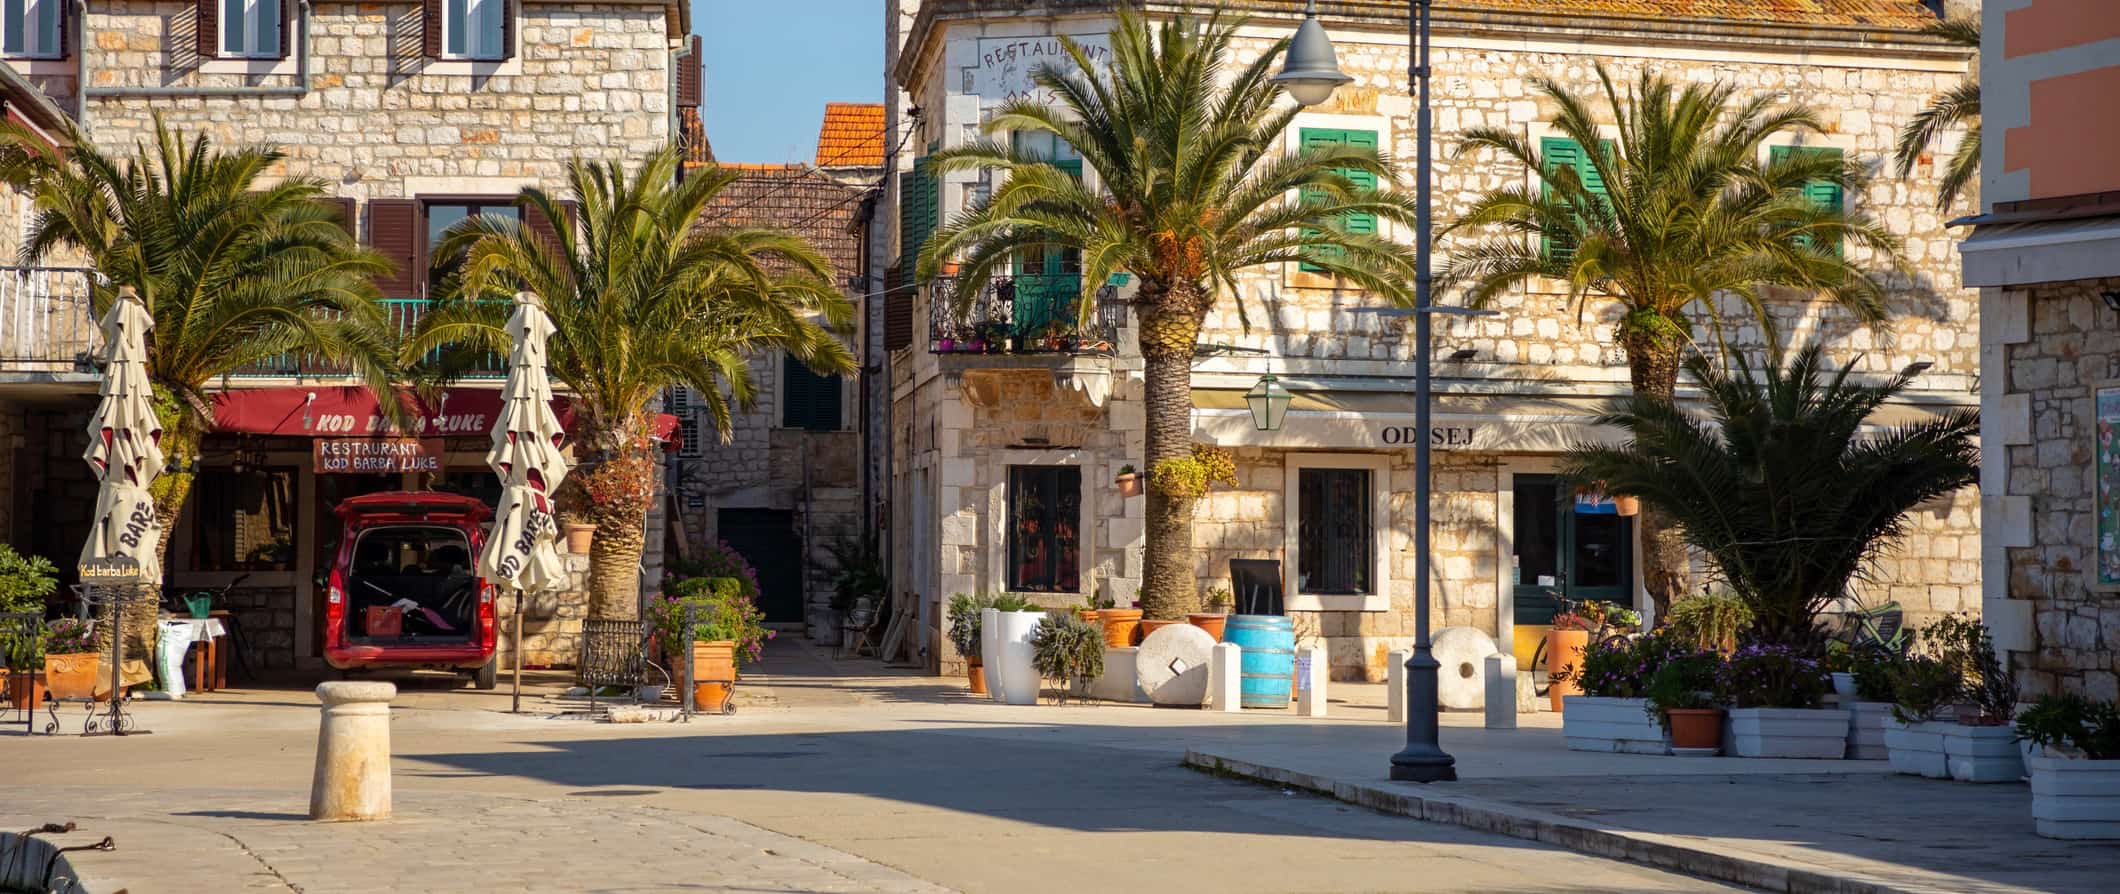 The historic old buildings of Dubrovnik, Croatia